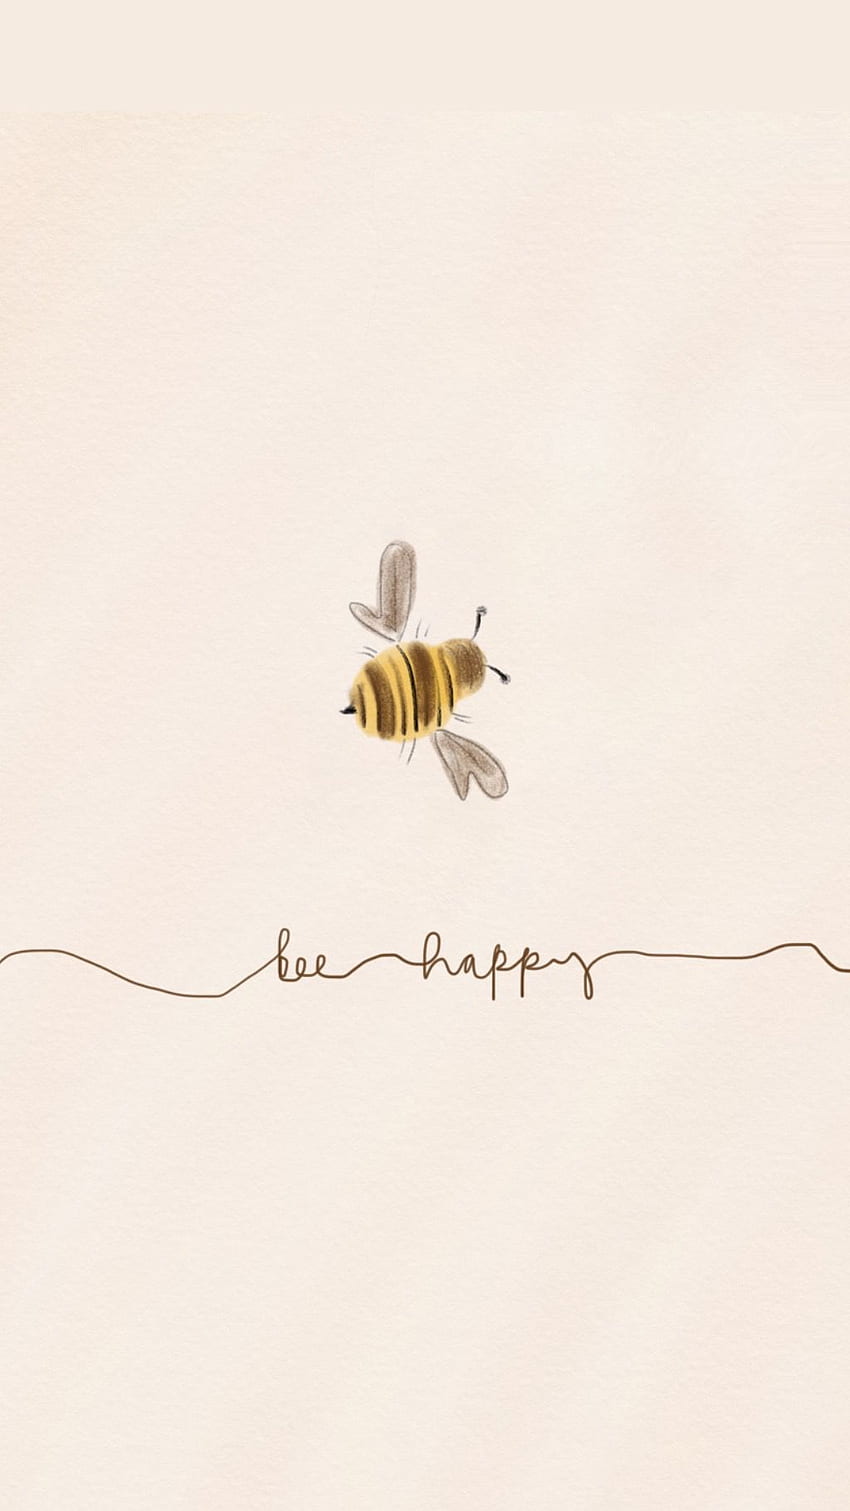 Download Cute 3D Cartoon Bee Wallpaper | Wallpapers.com